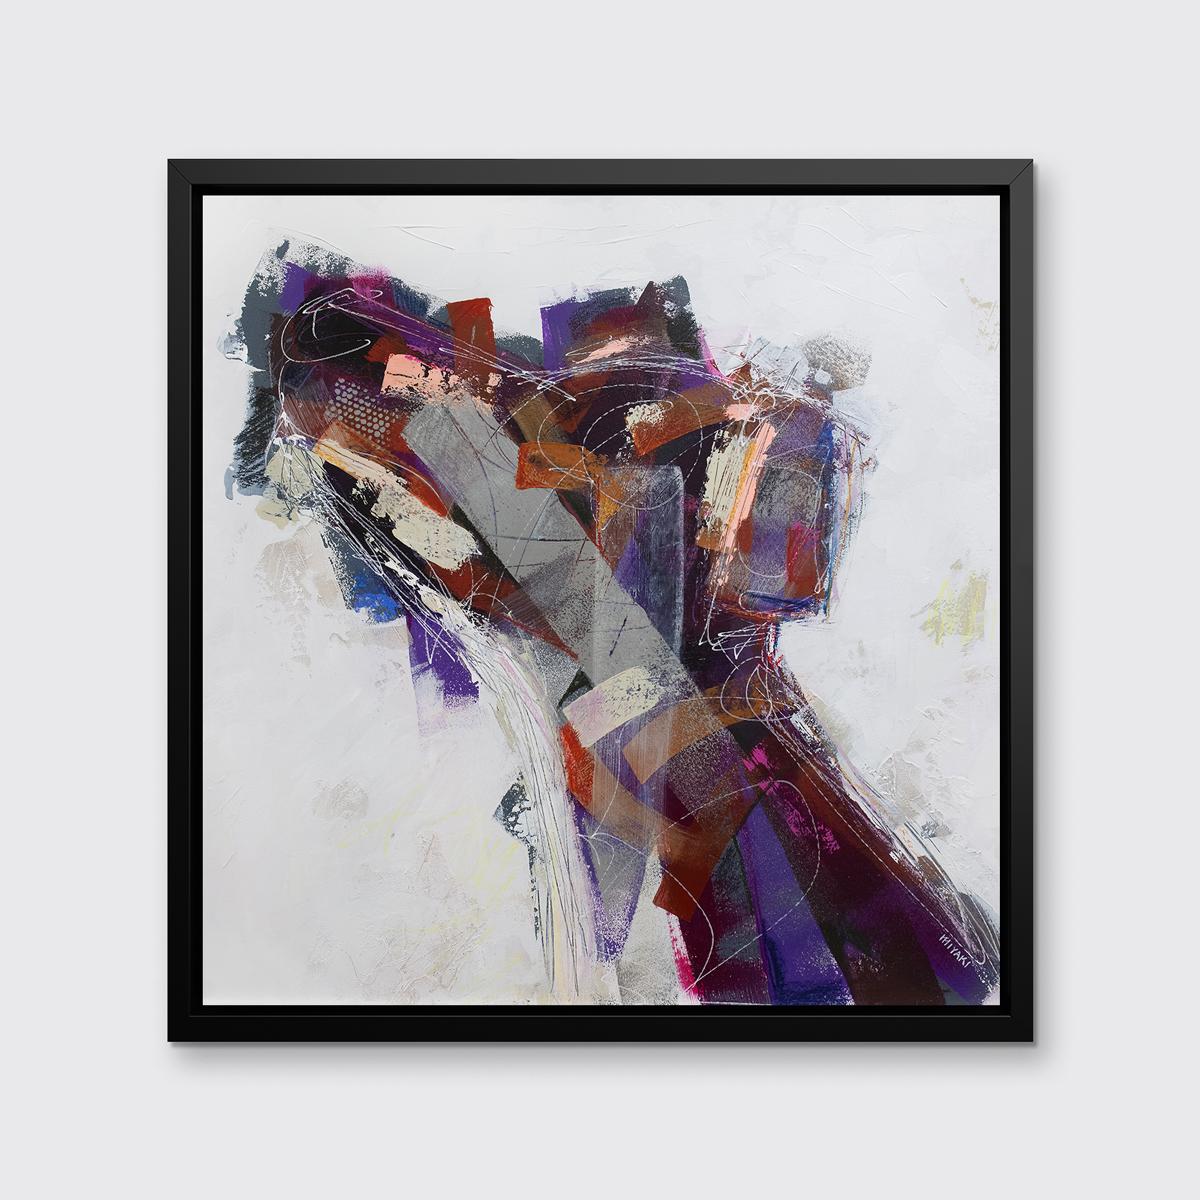 « Colorful Basenji » Impression giclée en édition limitée, 30